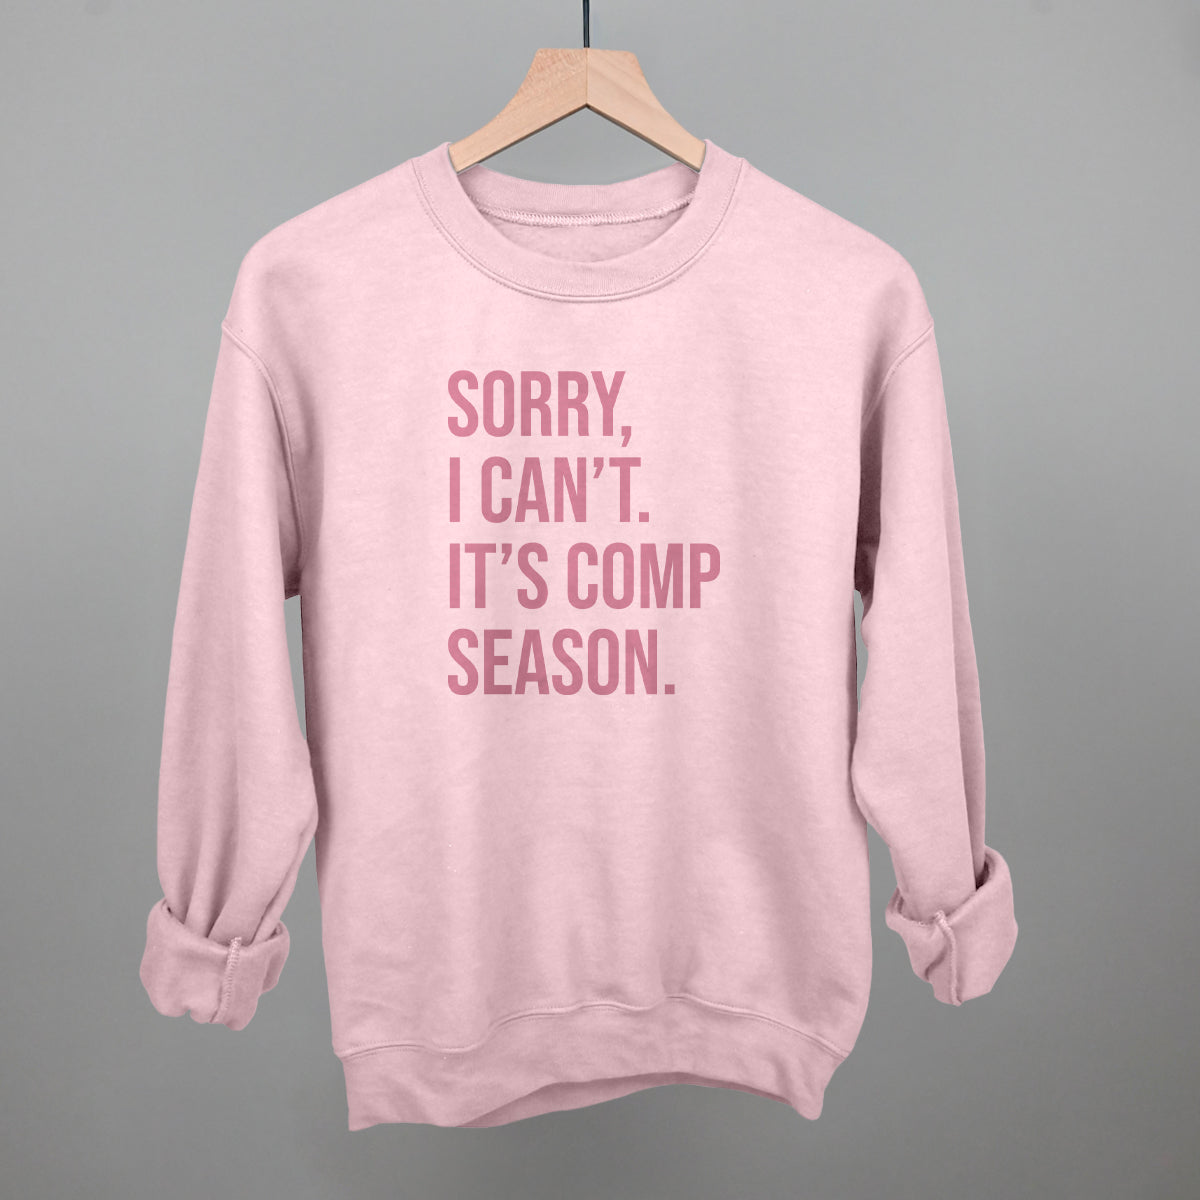 Sorry, I Can't. It's Comp Season.